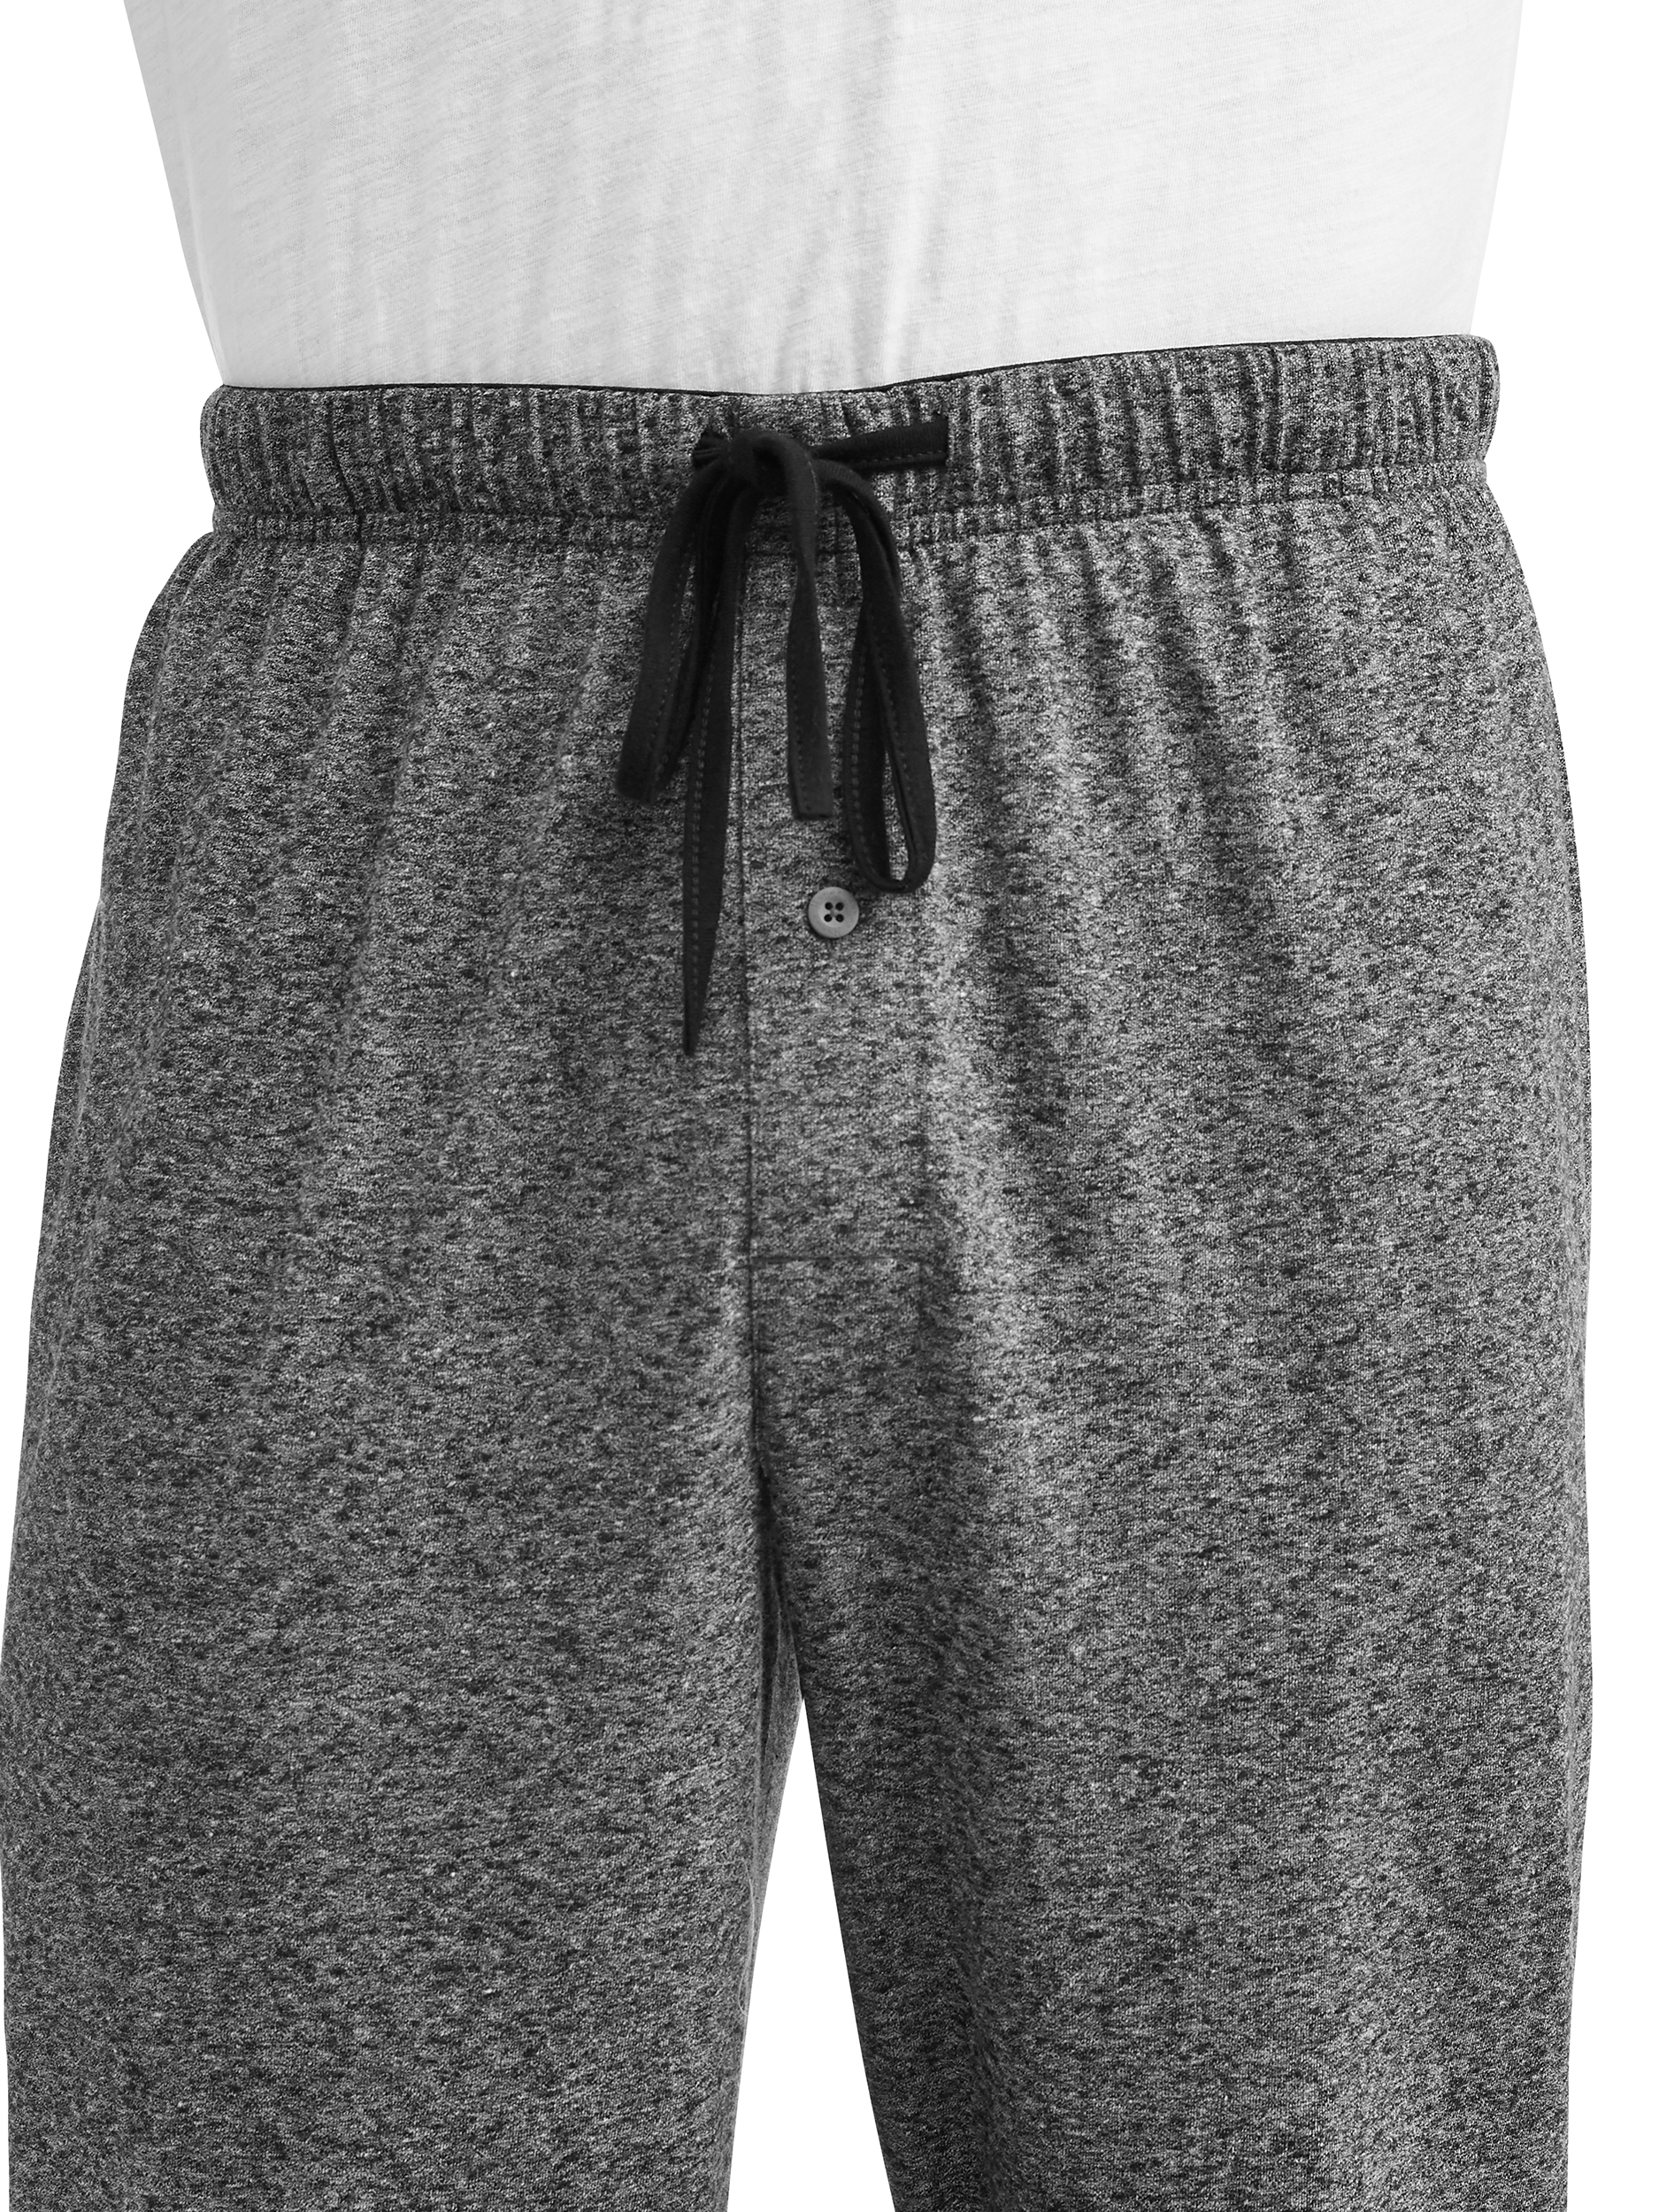 Hanes Men's and Big Men's X-Temp Solid Knit Pajama Pant - image 2 of 3